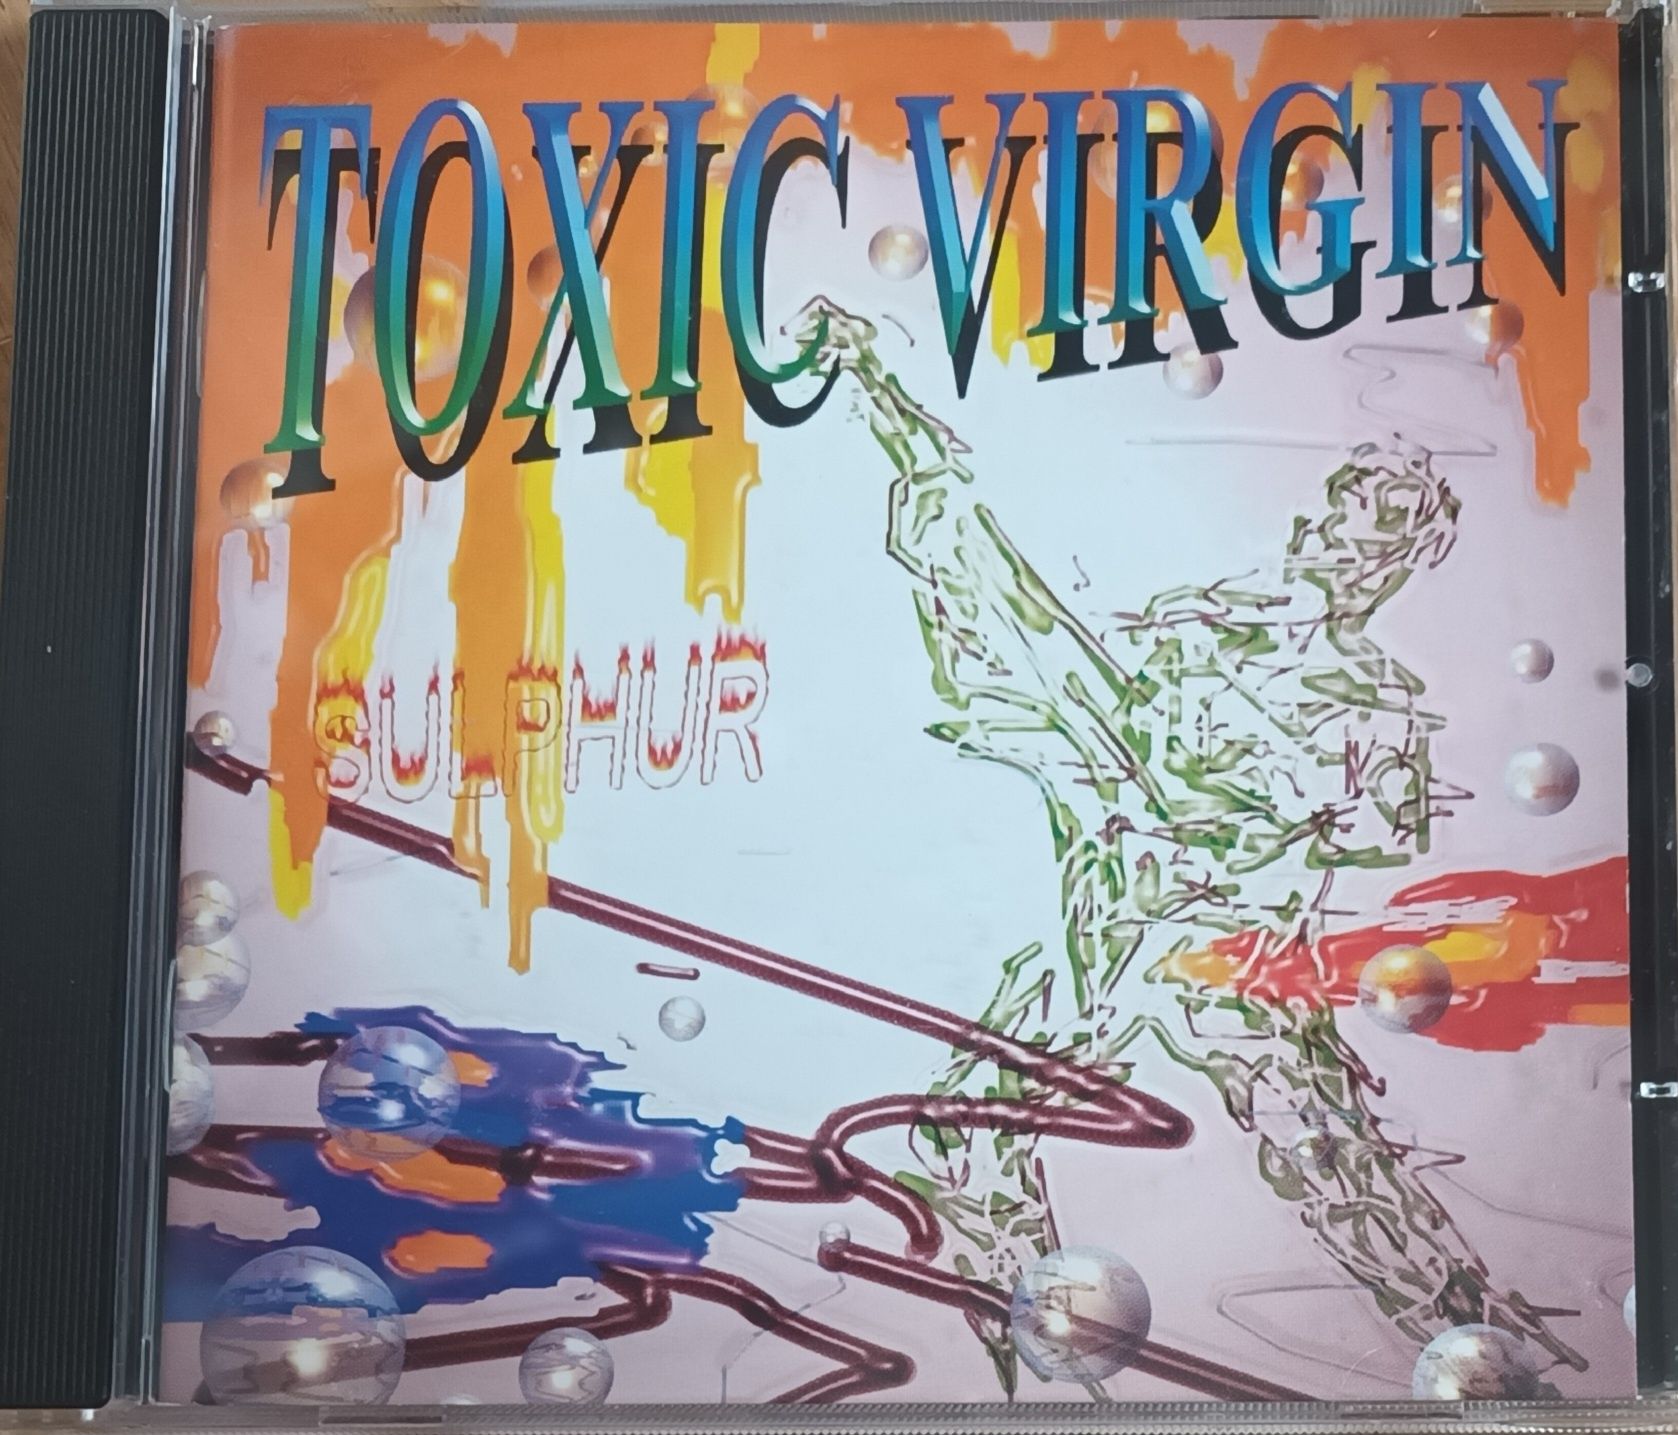 Płyta CD Toxic Virgin Sulphur  Hard Rock Heavy Metal